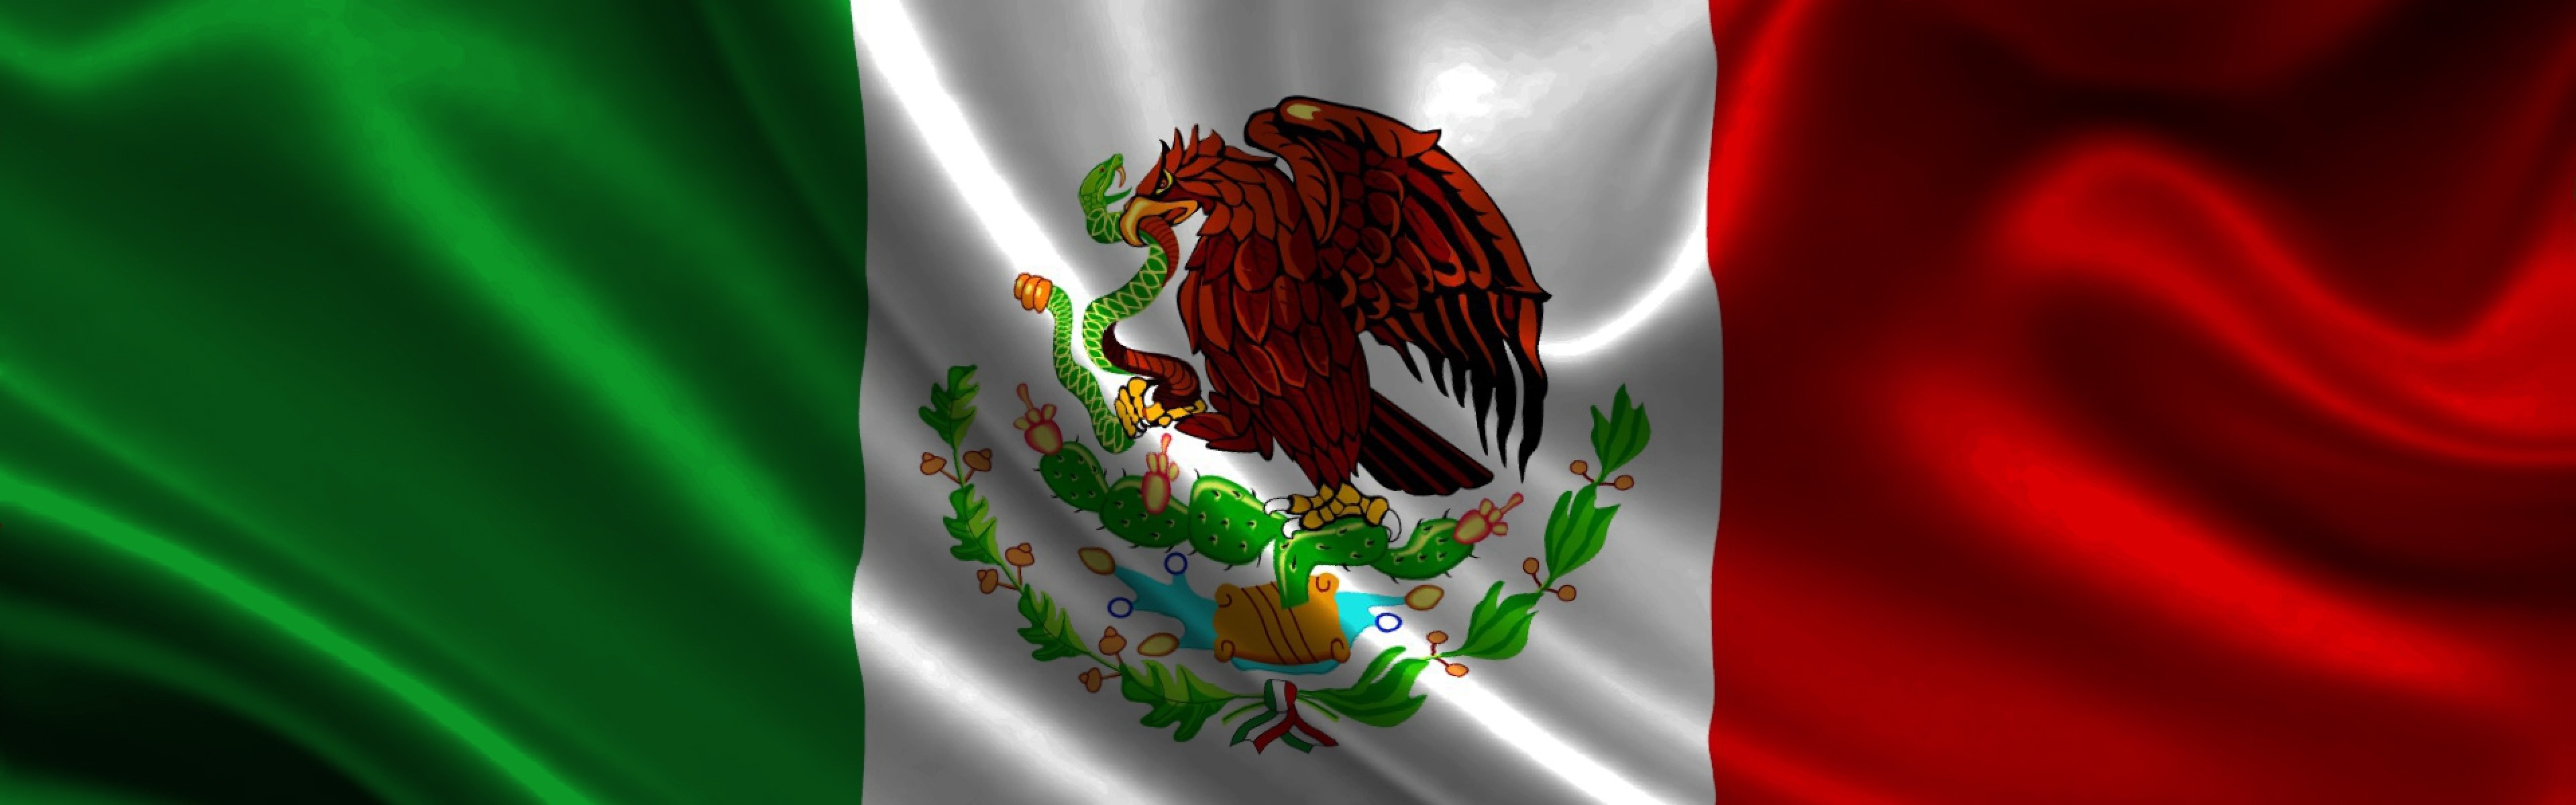 3840x1200 Mexico Flag Wallpaper - ...